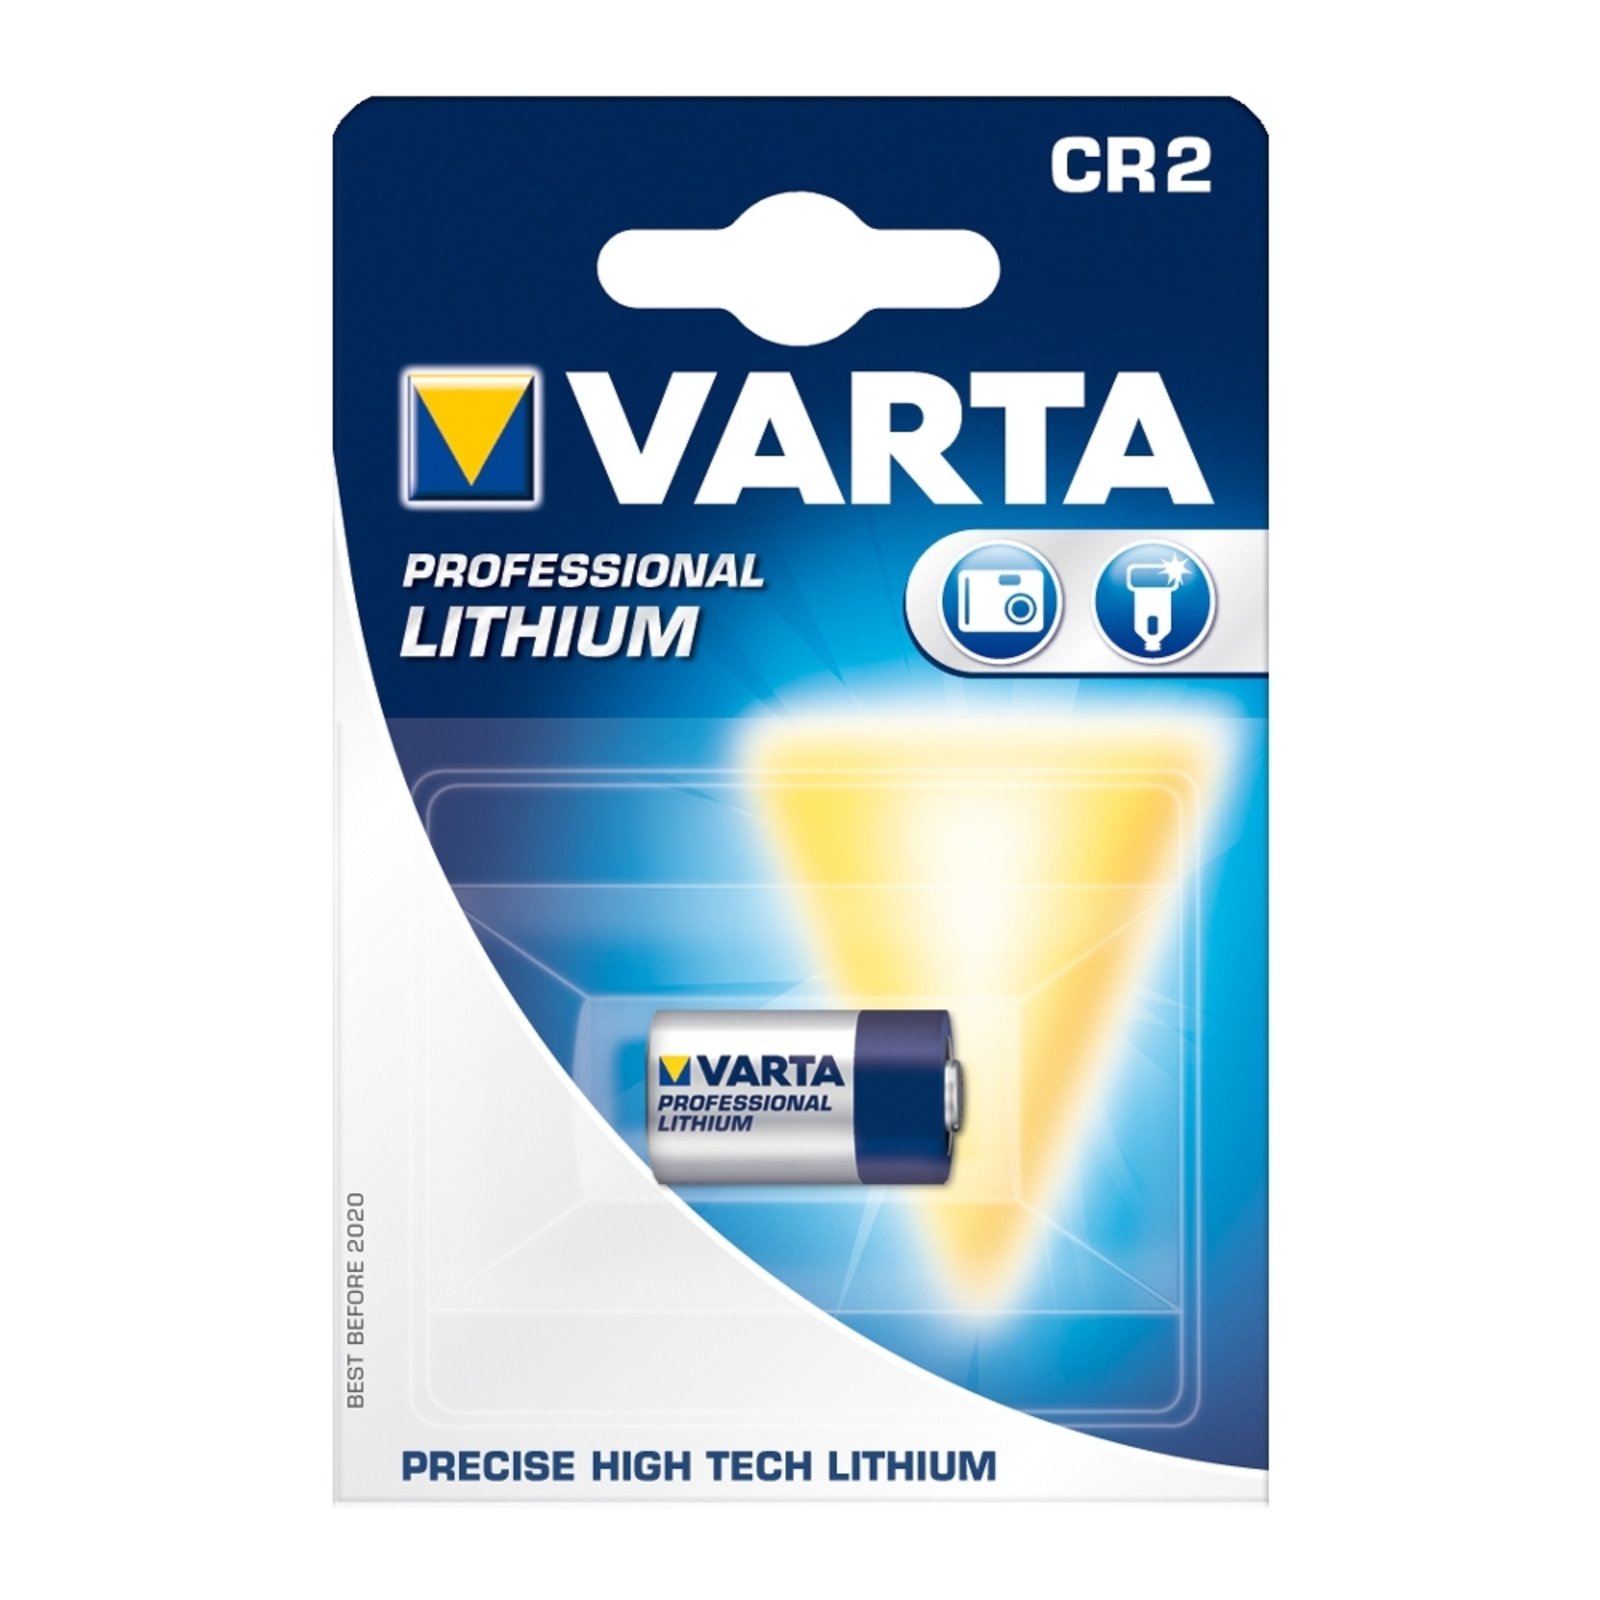 Litiumbatteri CR2 (6206) 3V fra VARTA